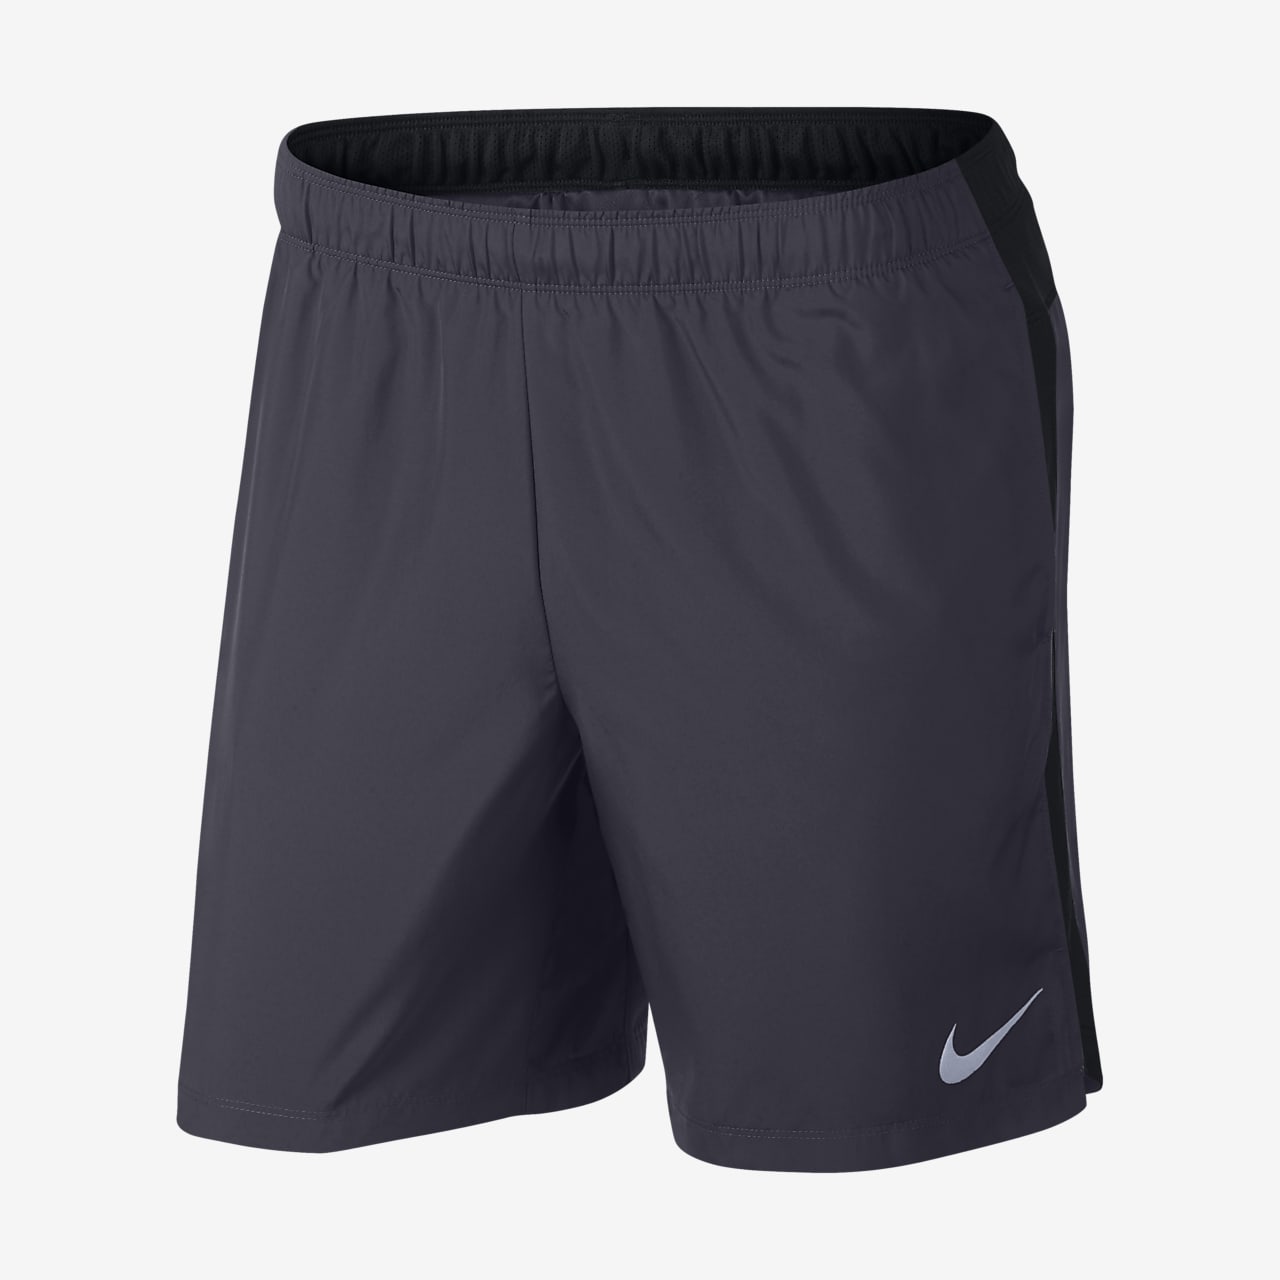 Buy jd sports shorts nike> OFF-73%